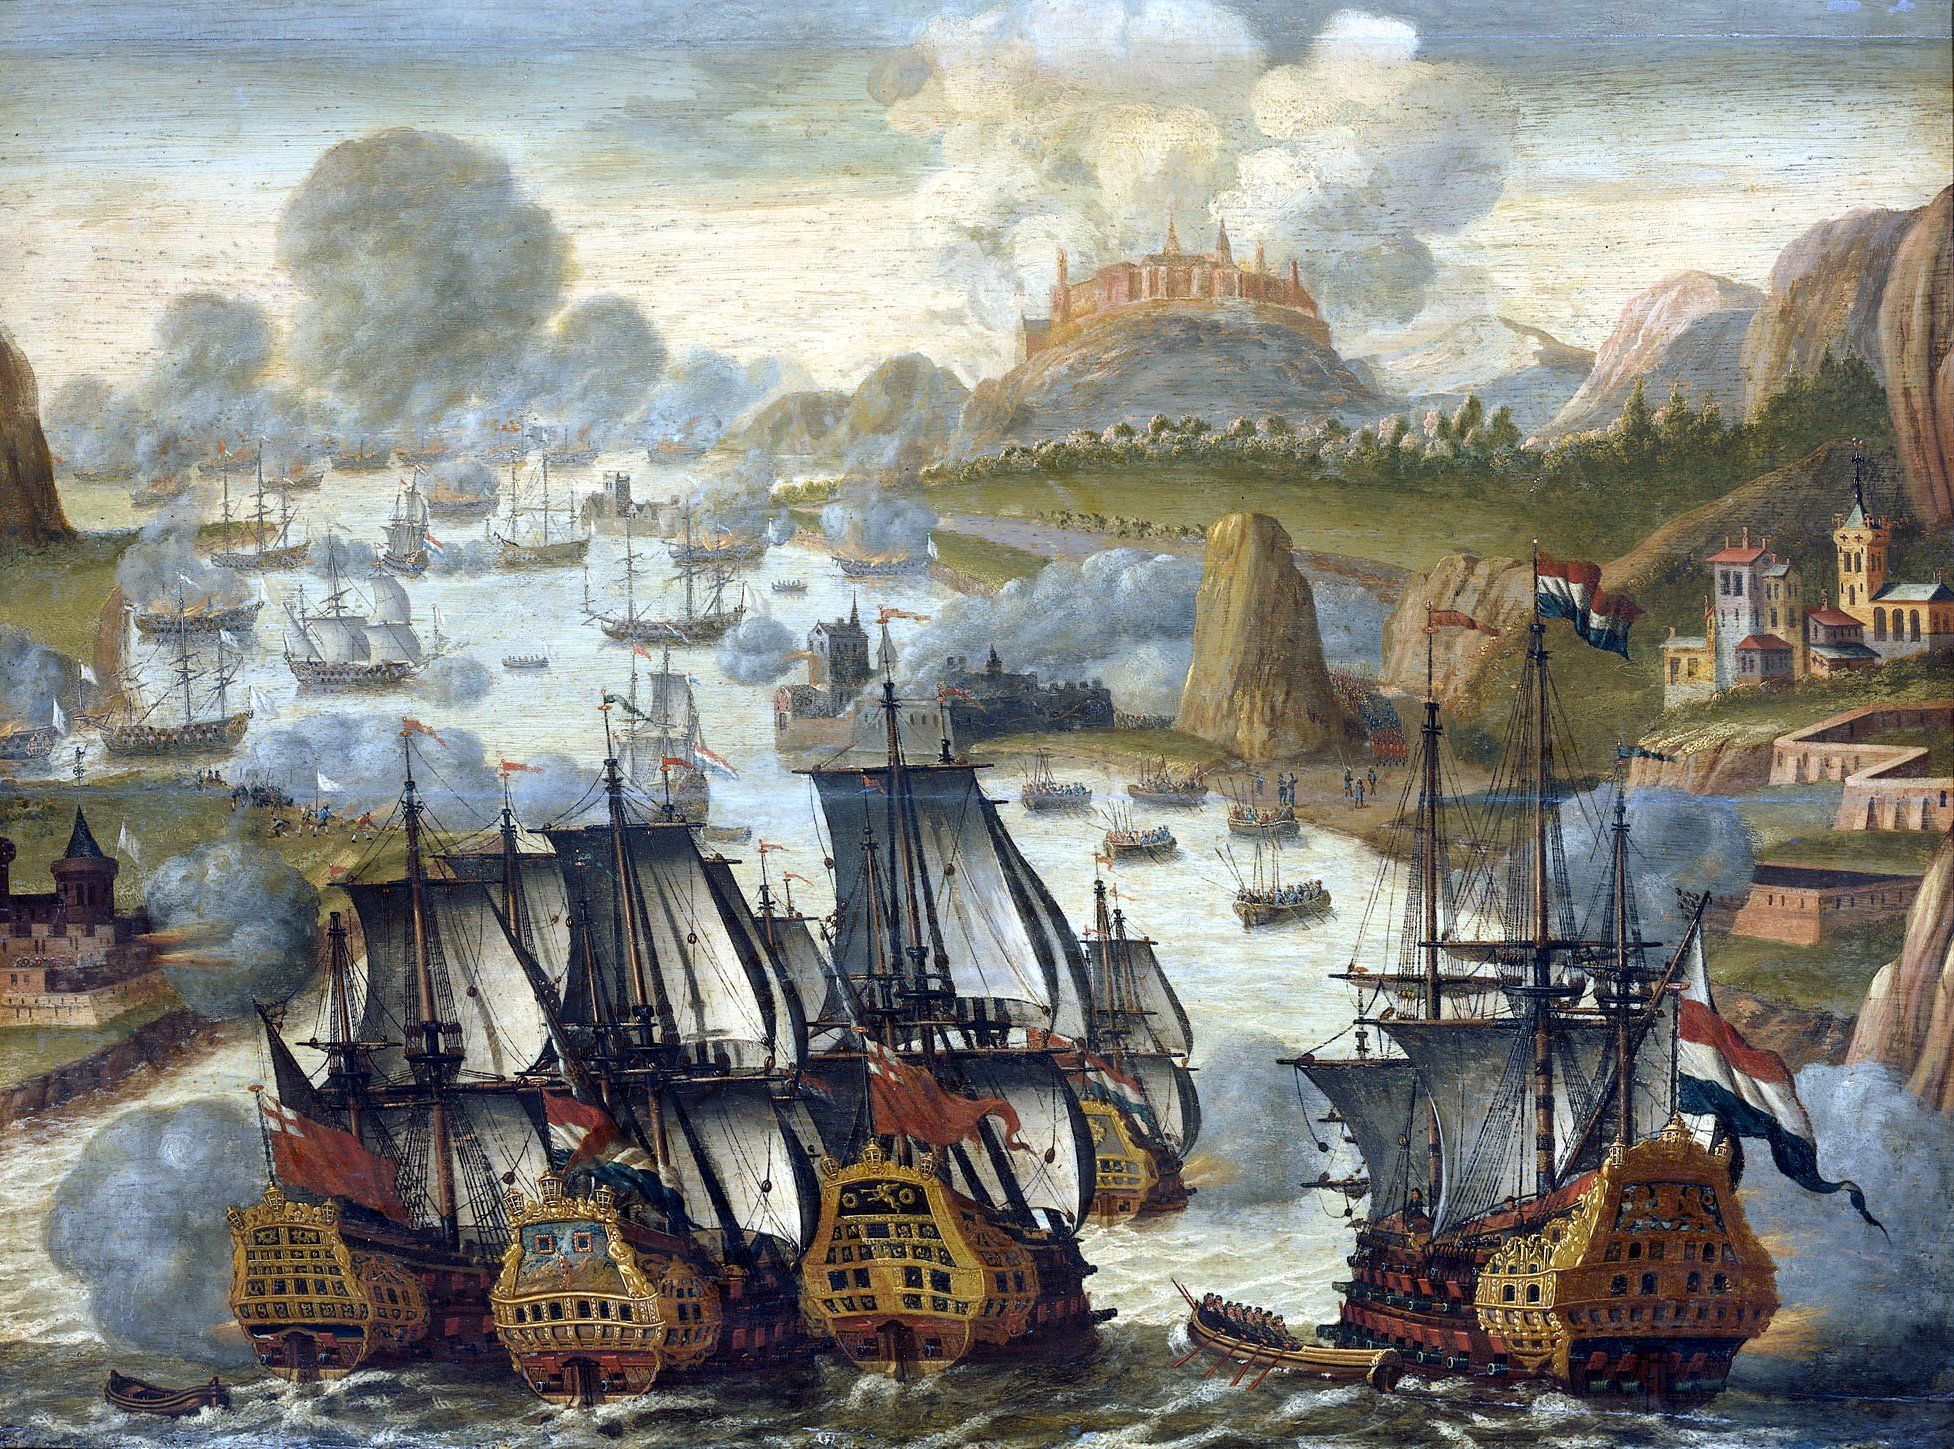 O afundimento da frota de Indias (1702)